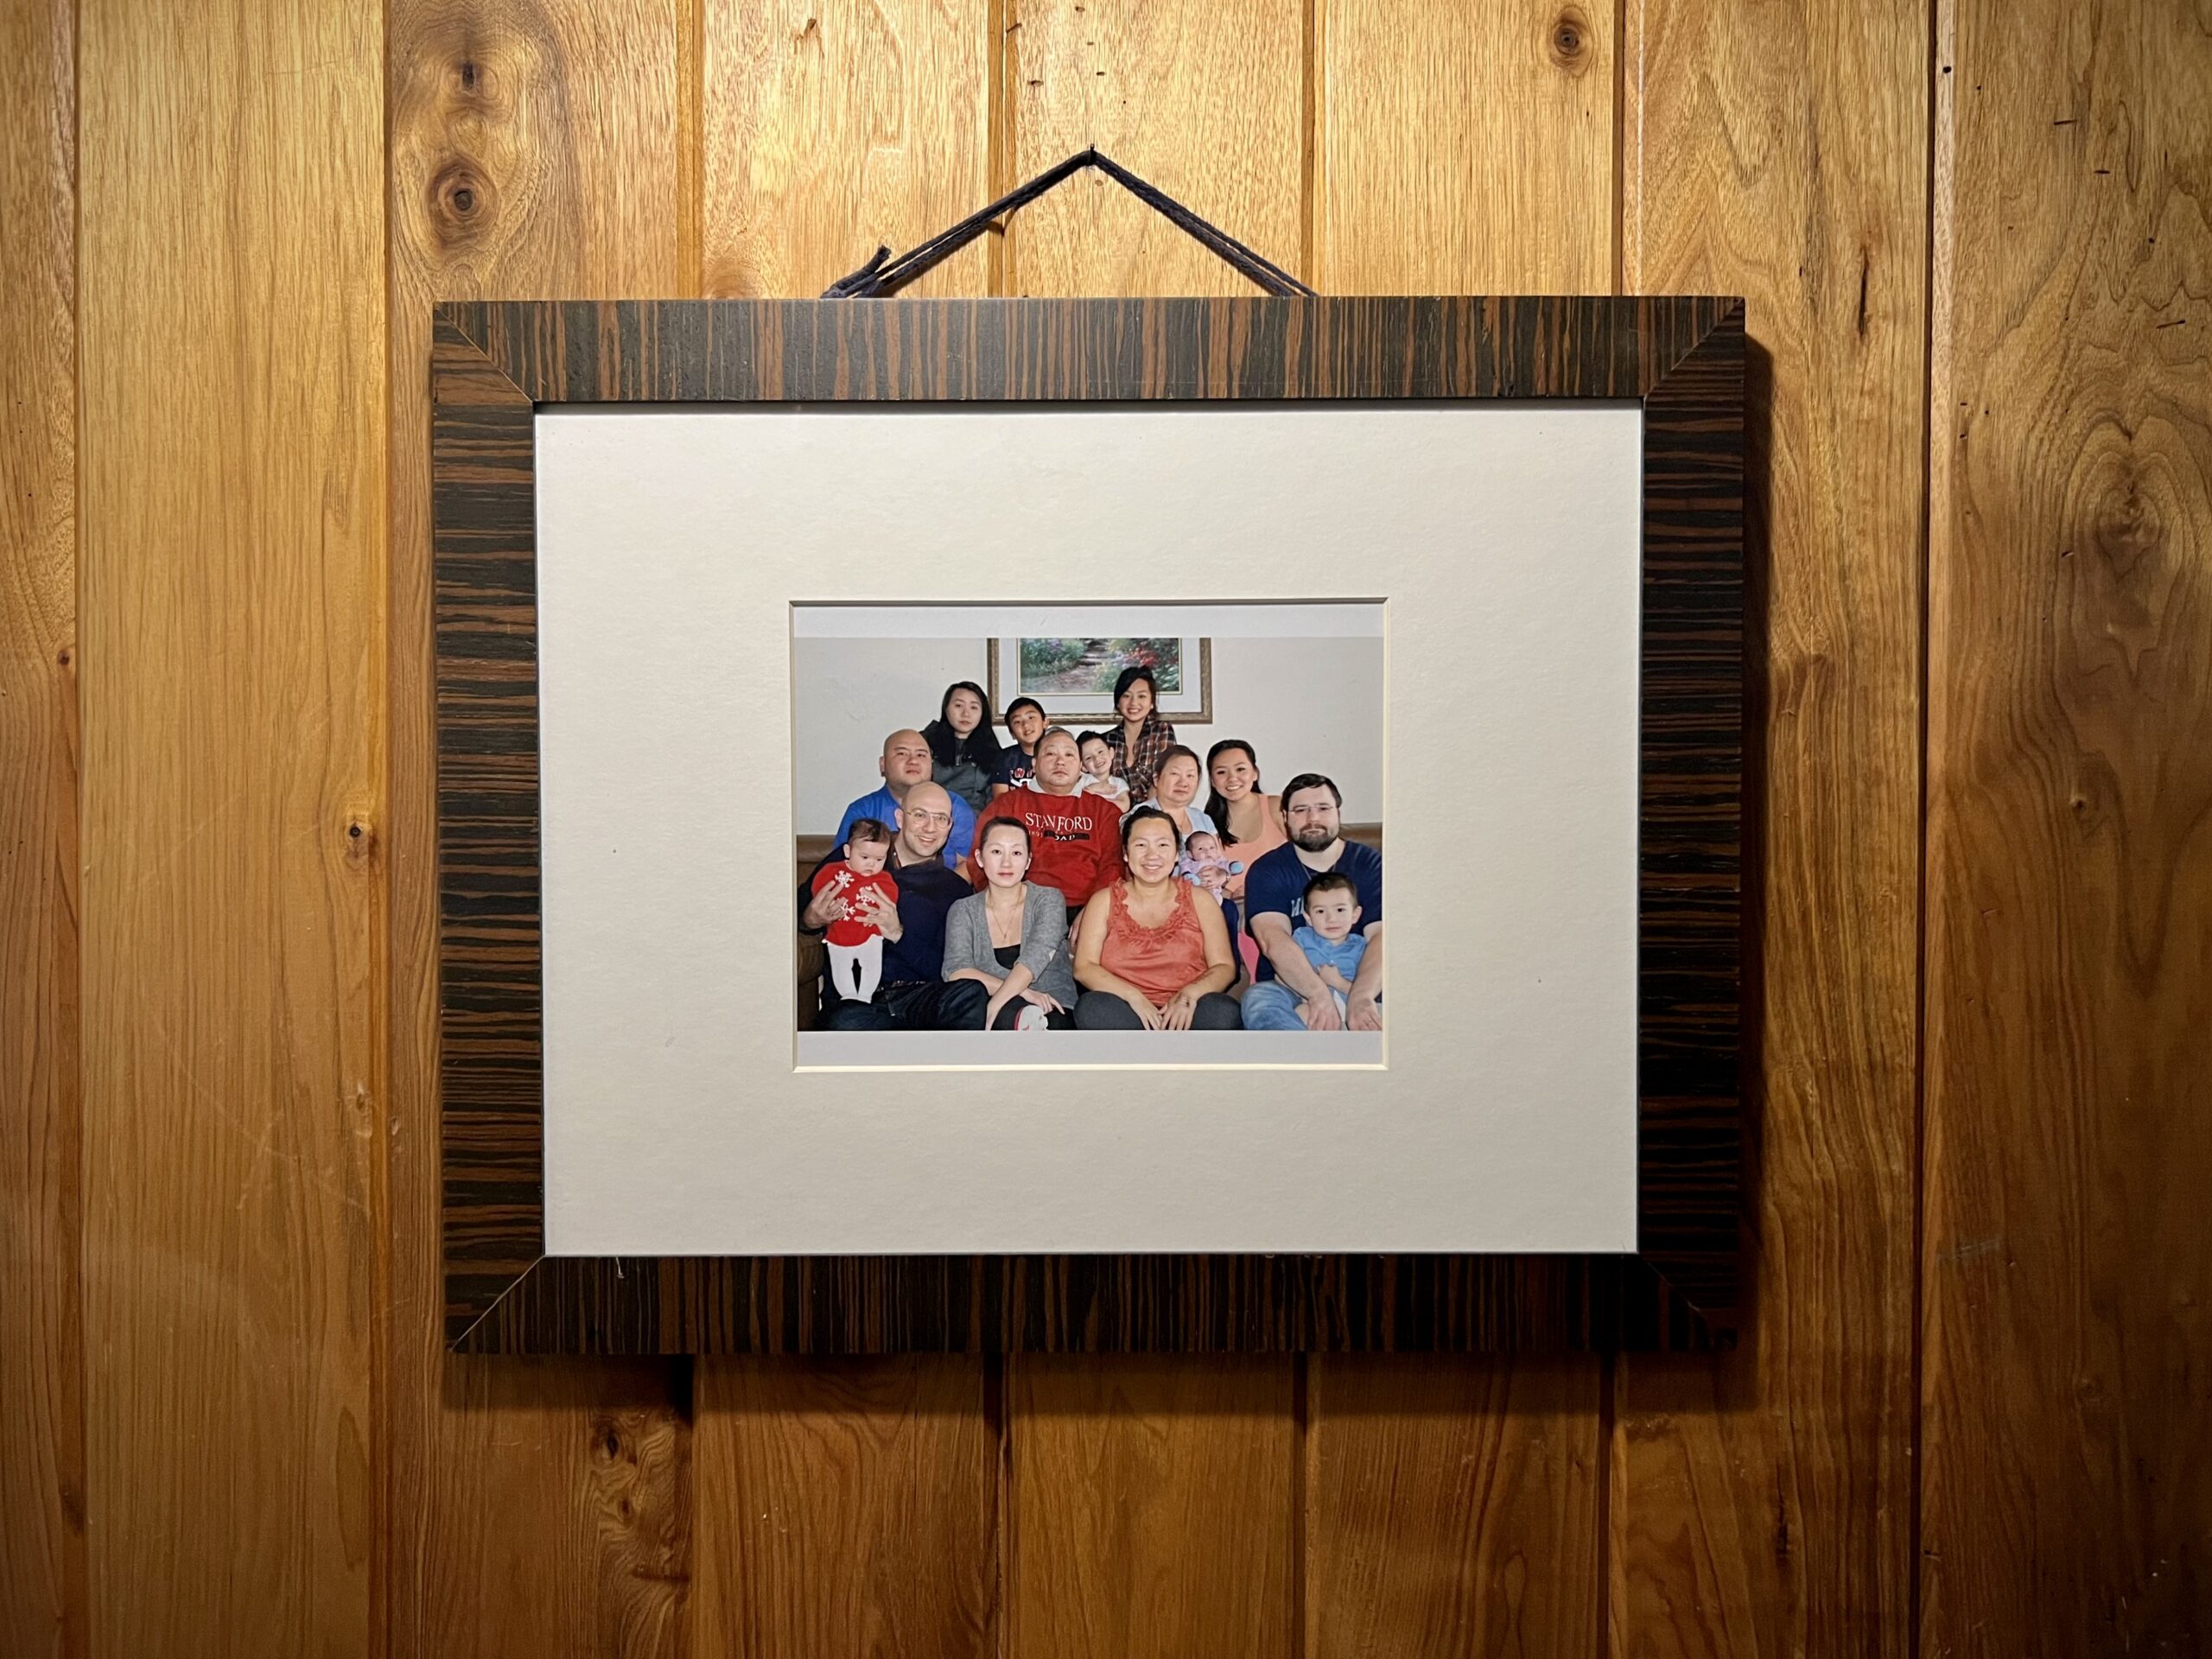 Group photo in dark wood frame hangs on wood paneled wall.